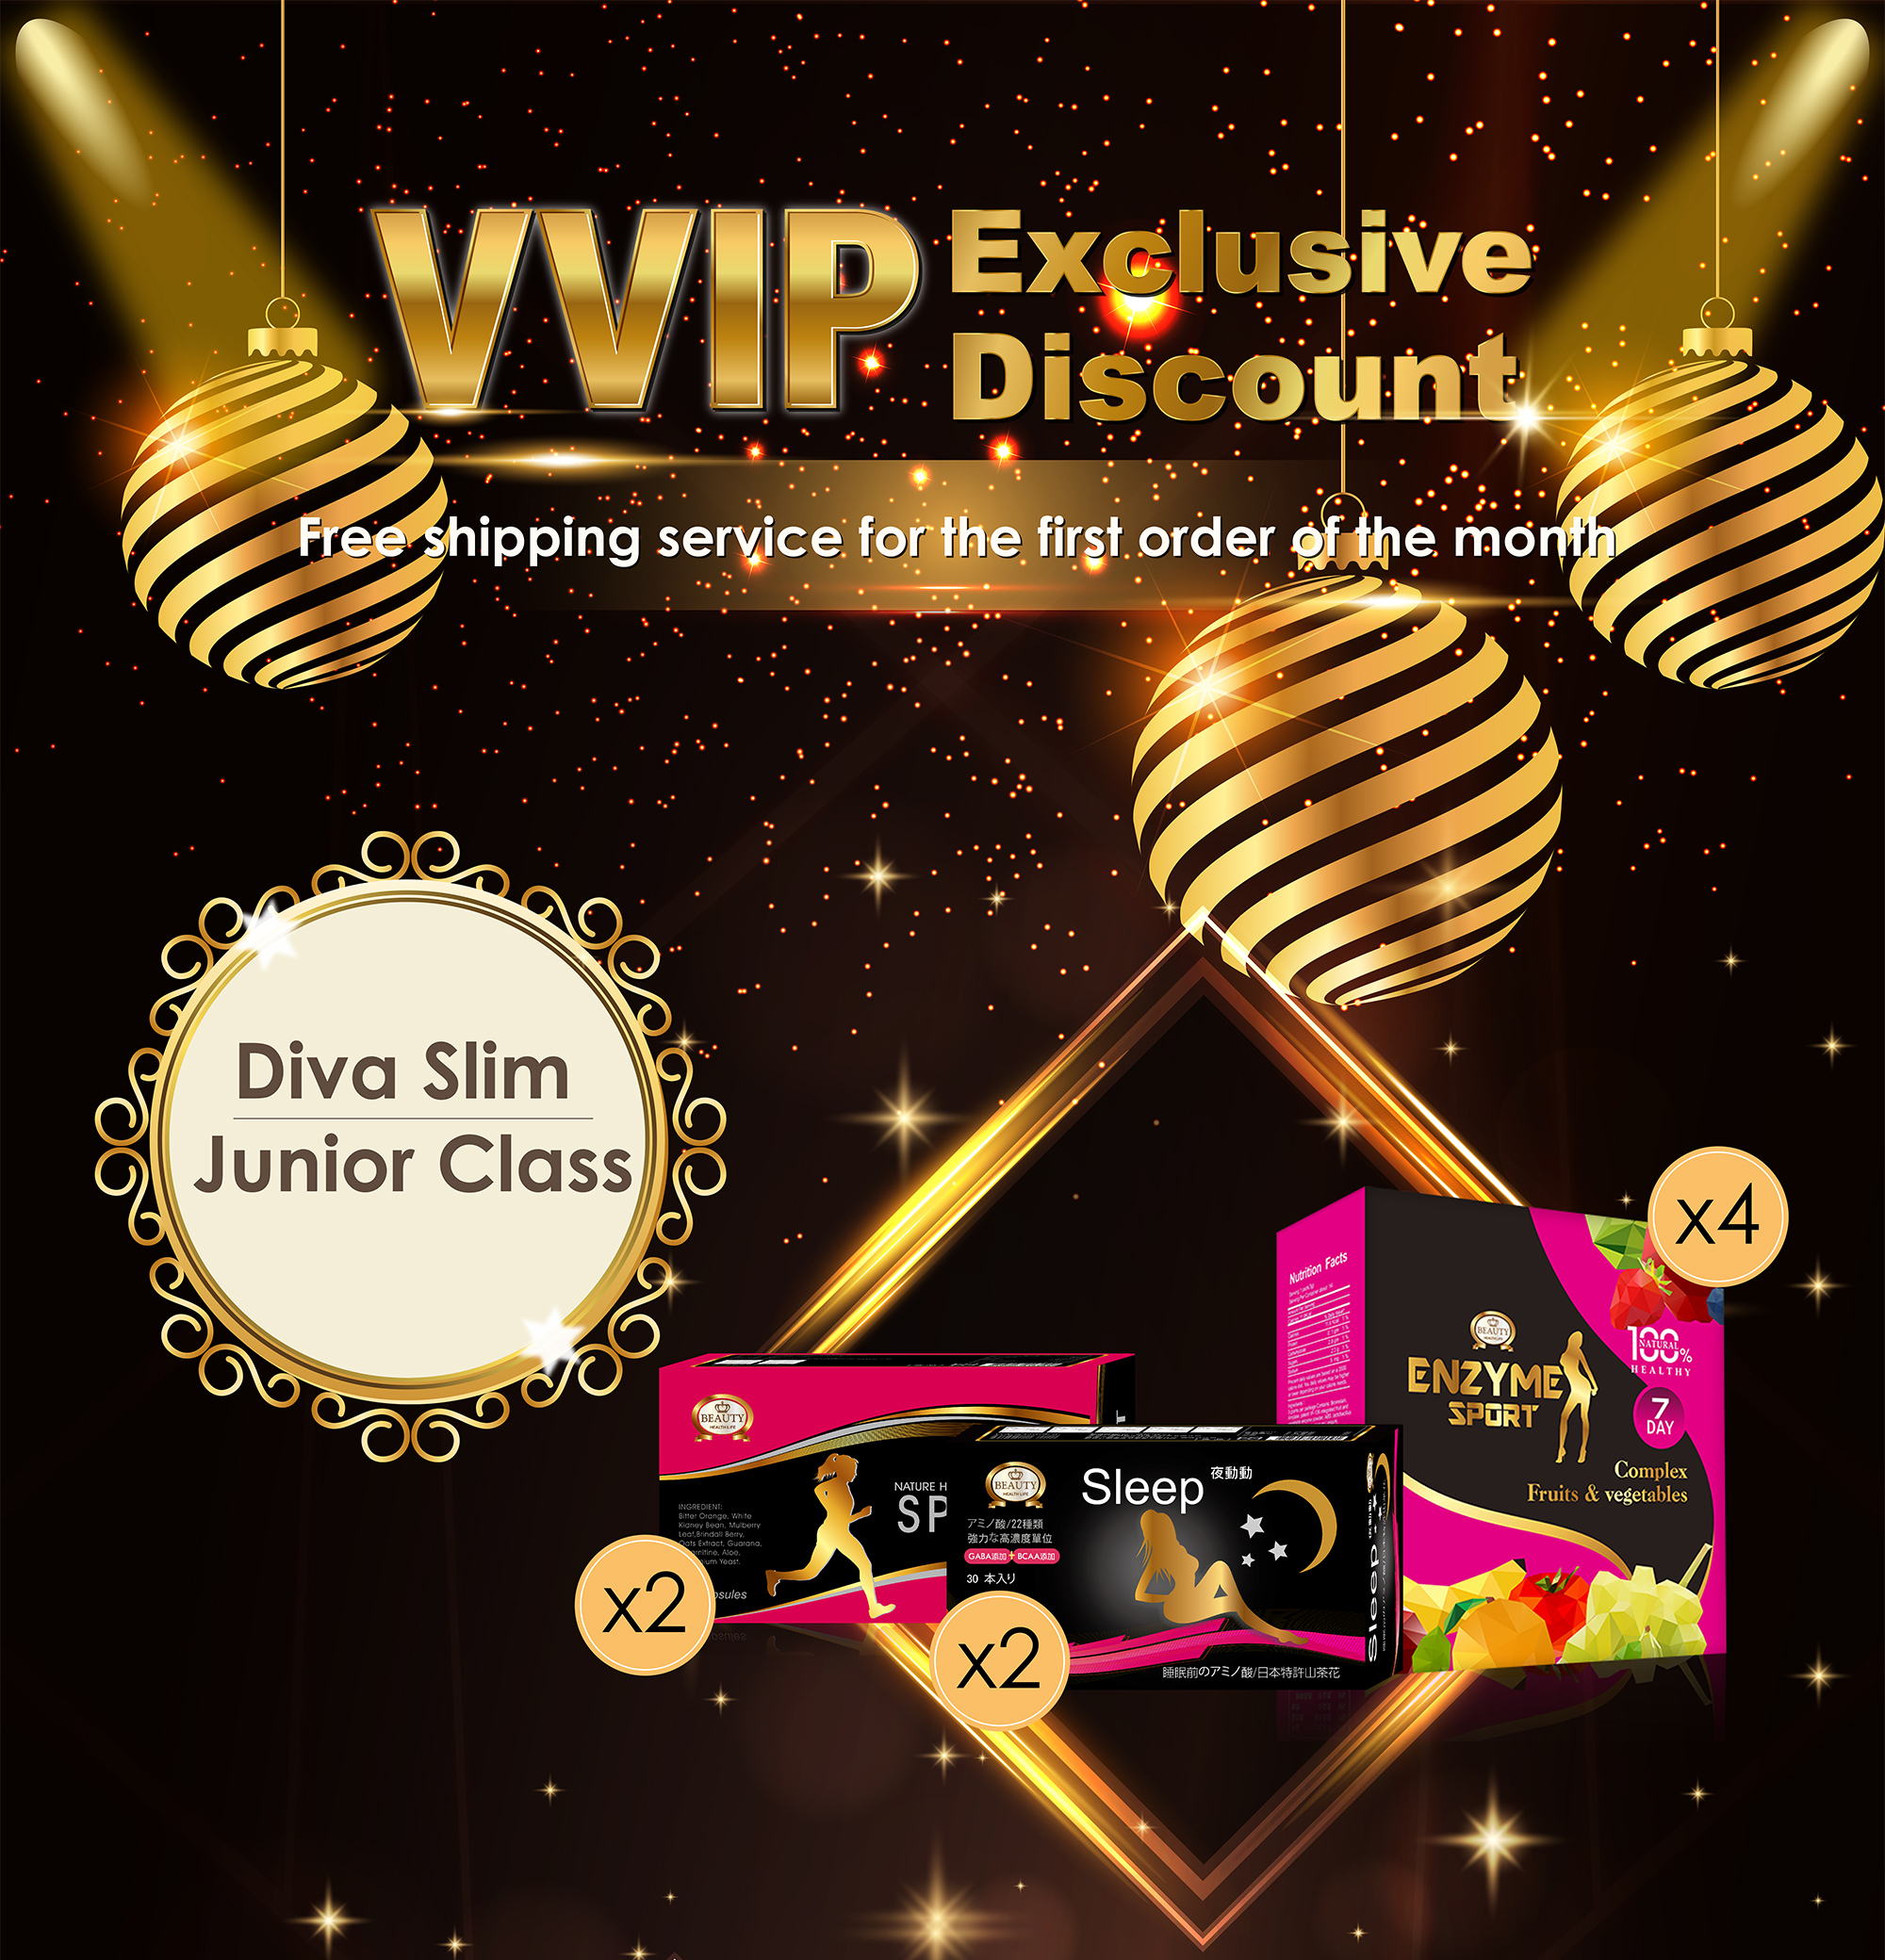 VVIP exclusive discount EDM_1.jpg